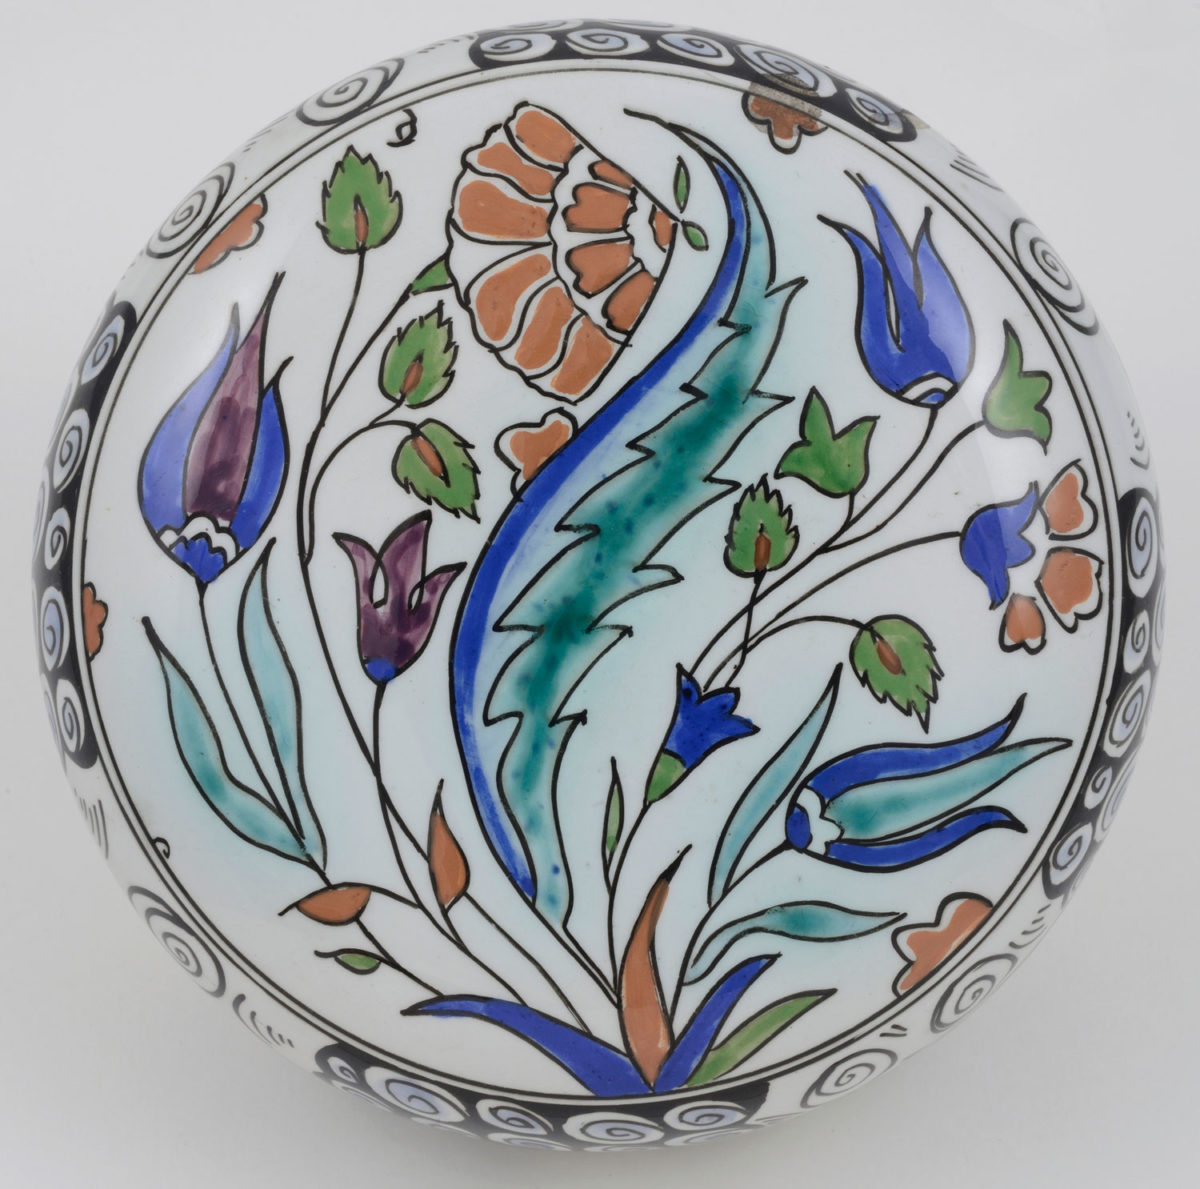 The exhibition “The Magic of Iznik Ceramics” is on at the Benaki Museum of Islamic Art.  